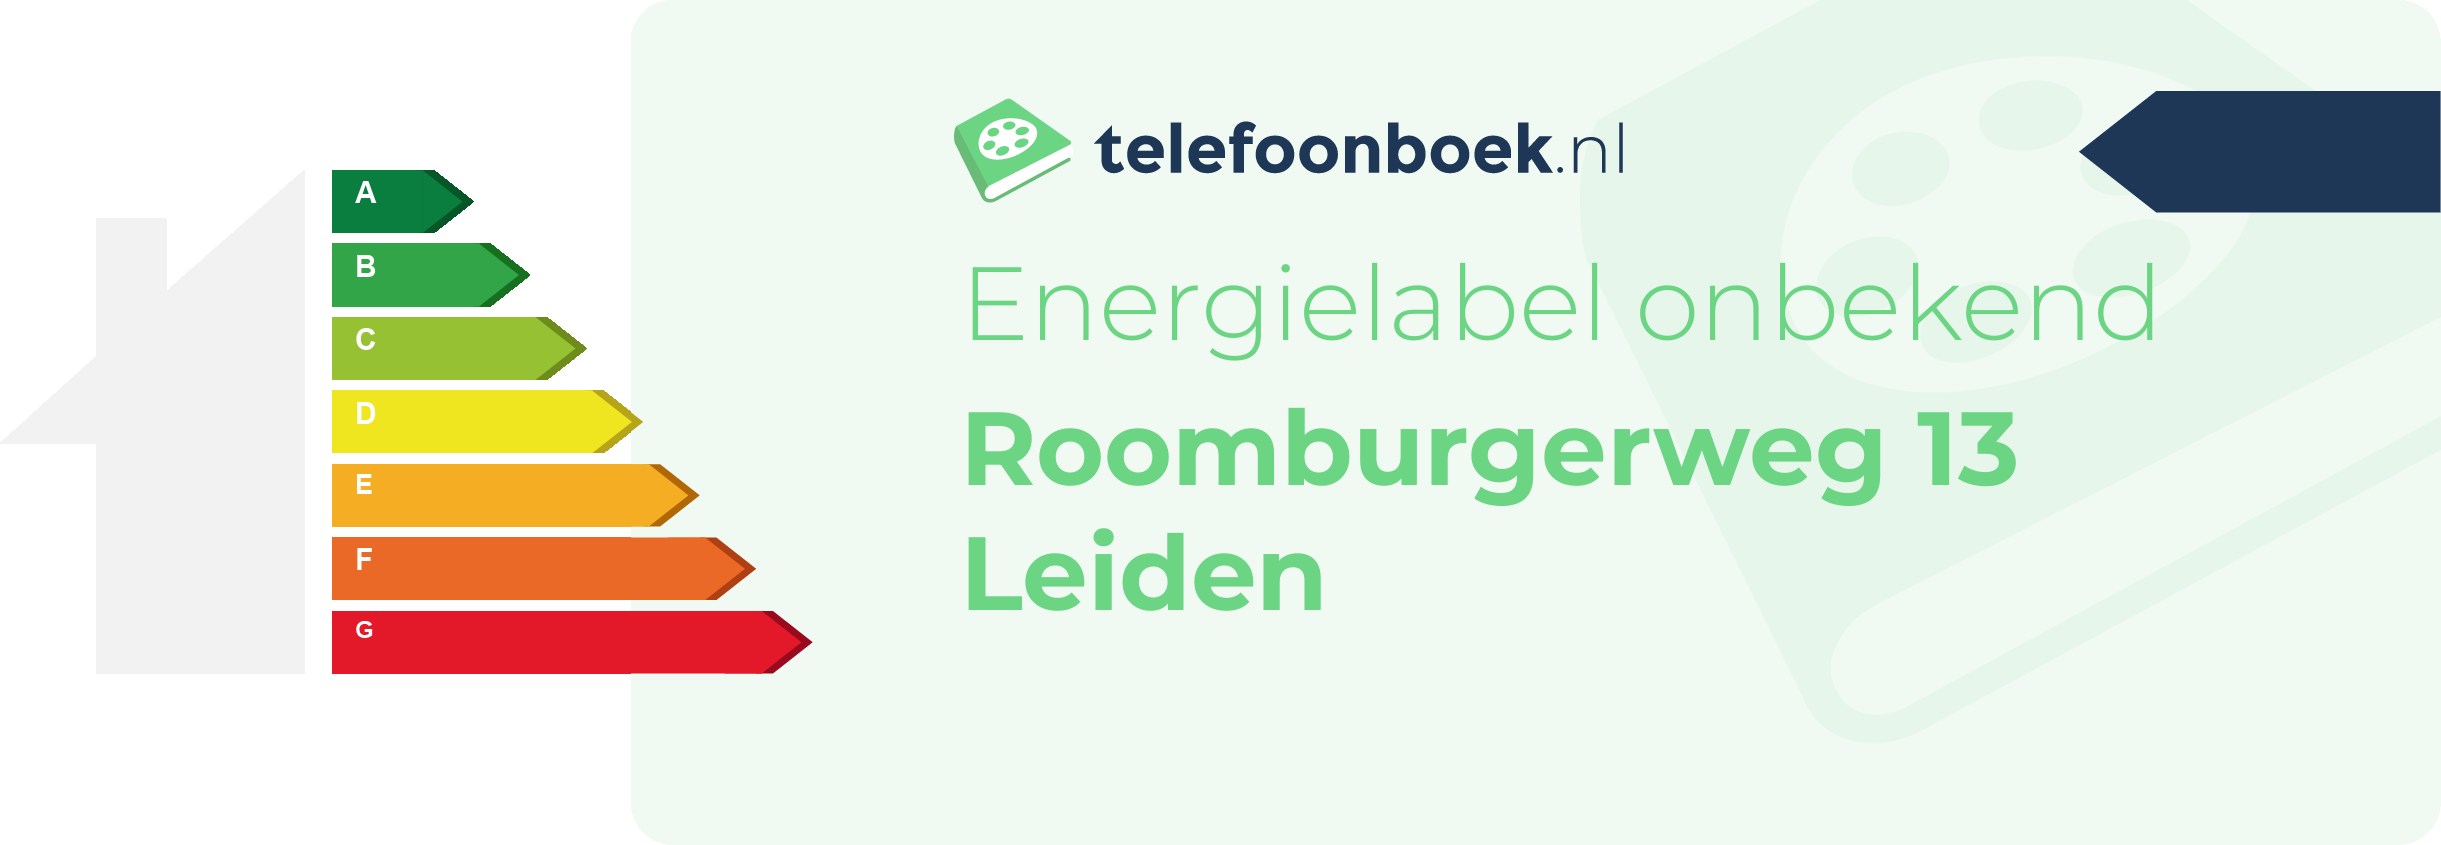 Energielabel Roomburgerweg 13 Leiden